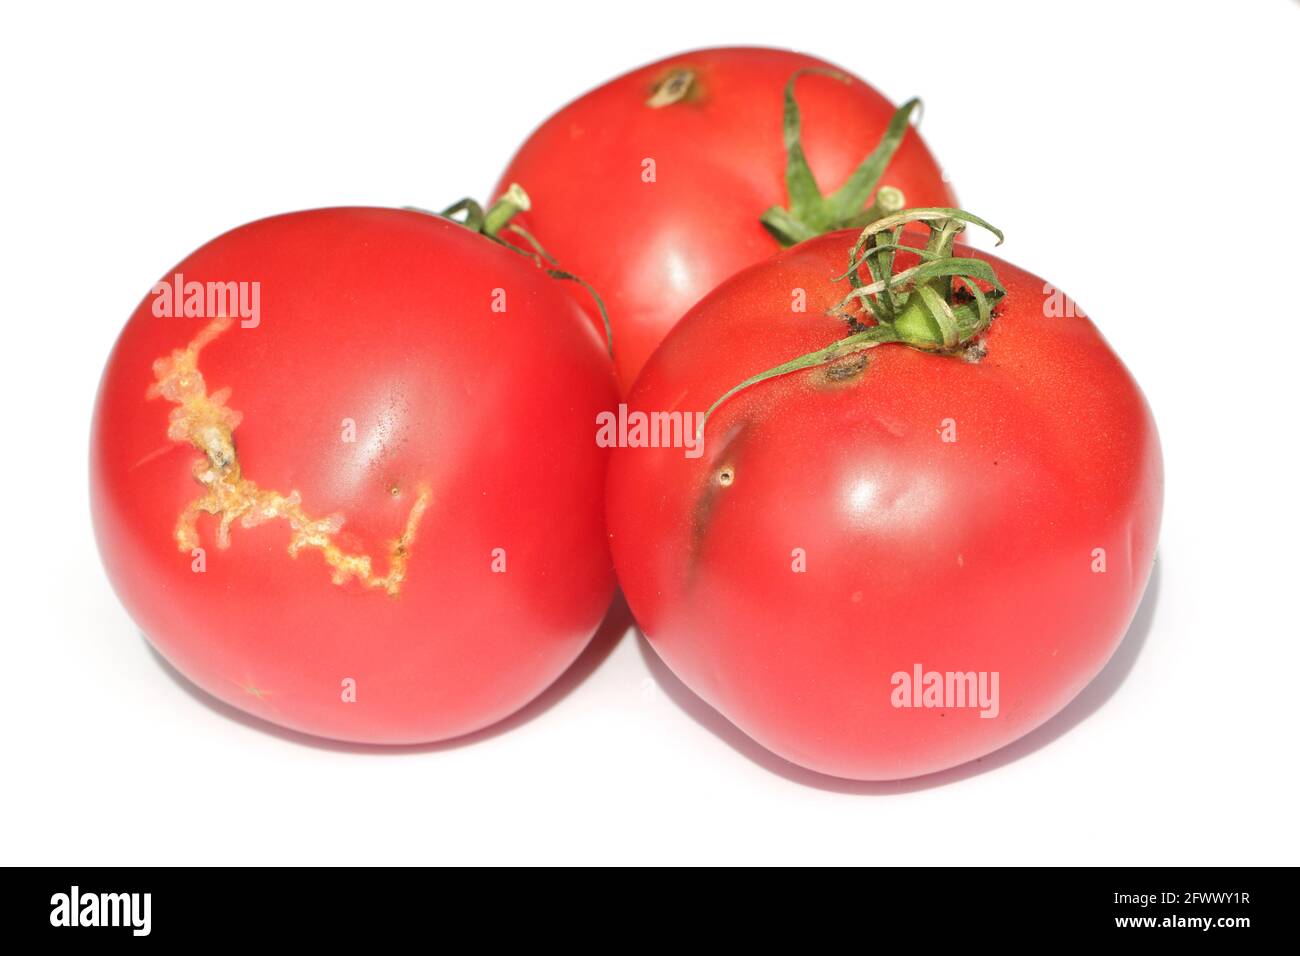 Tomates dañados por orugas de hojalata de tomate también llamado gusano de tomate o polilla de tomate sudamericana - Tuta absoluta (nombre latino). Foto de stock